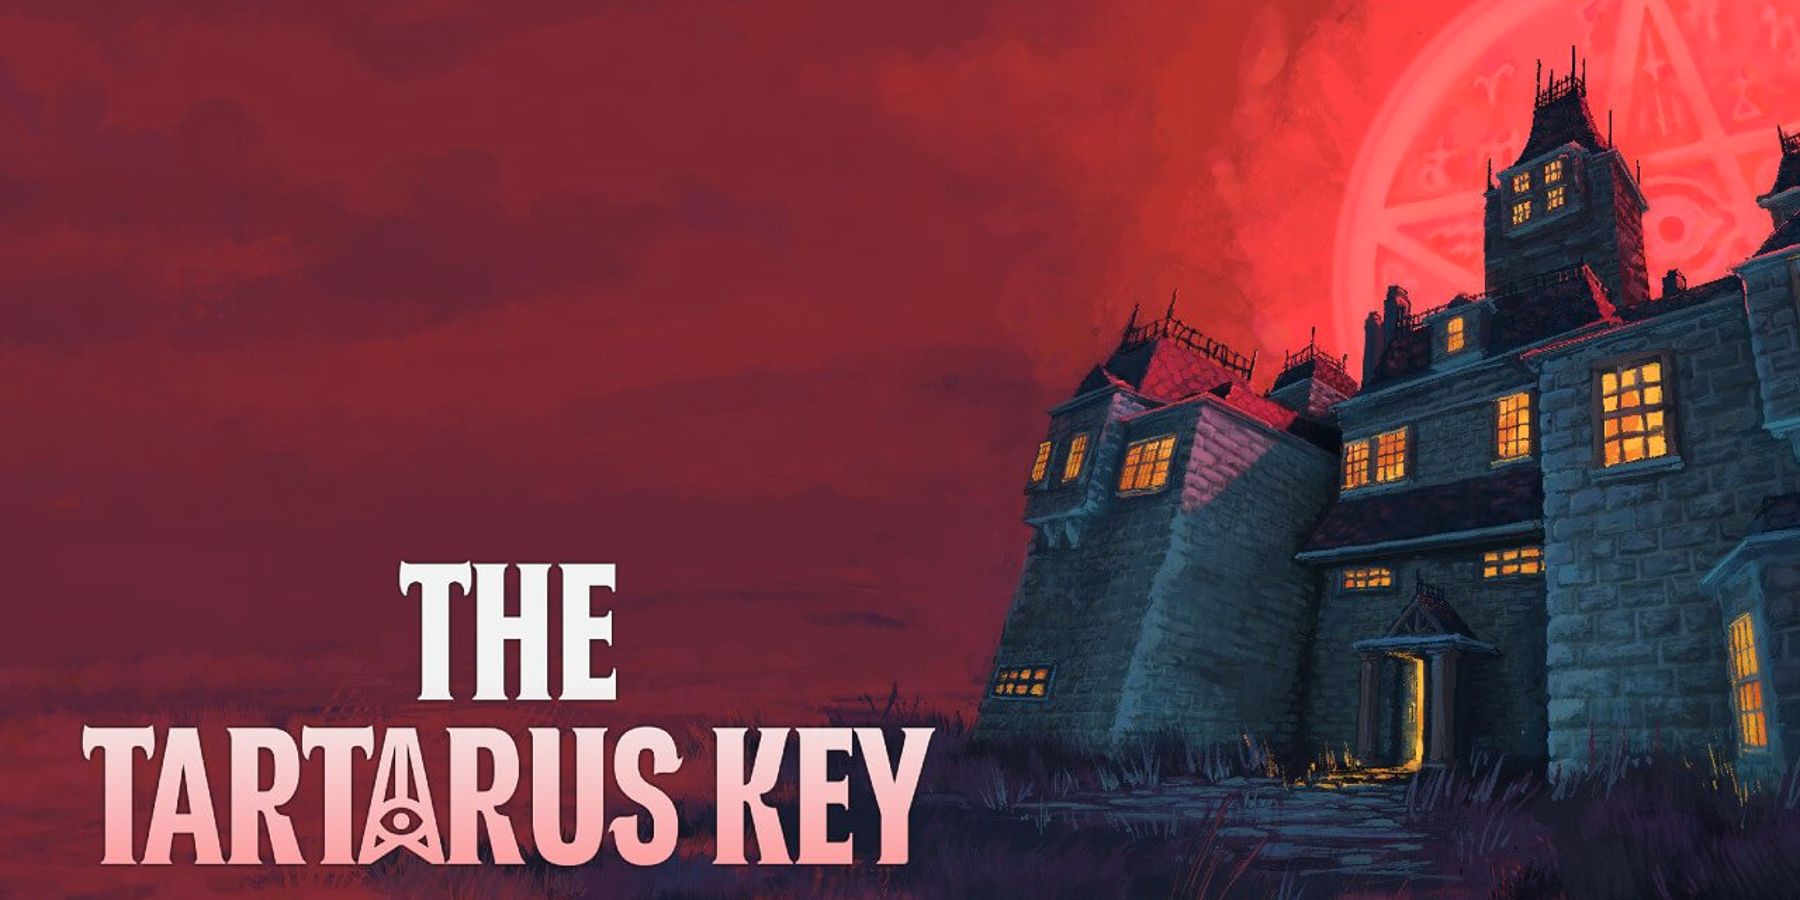 PS1 Style Horror Game The Tartarus Key annonsert for Nintendo Switch